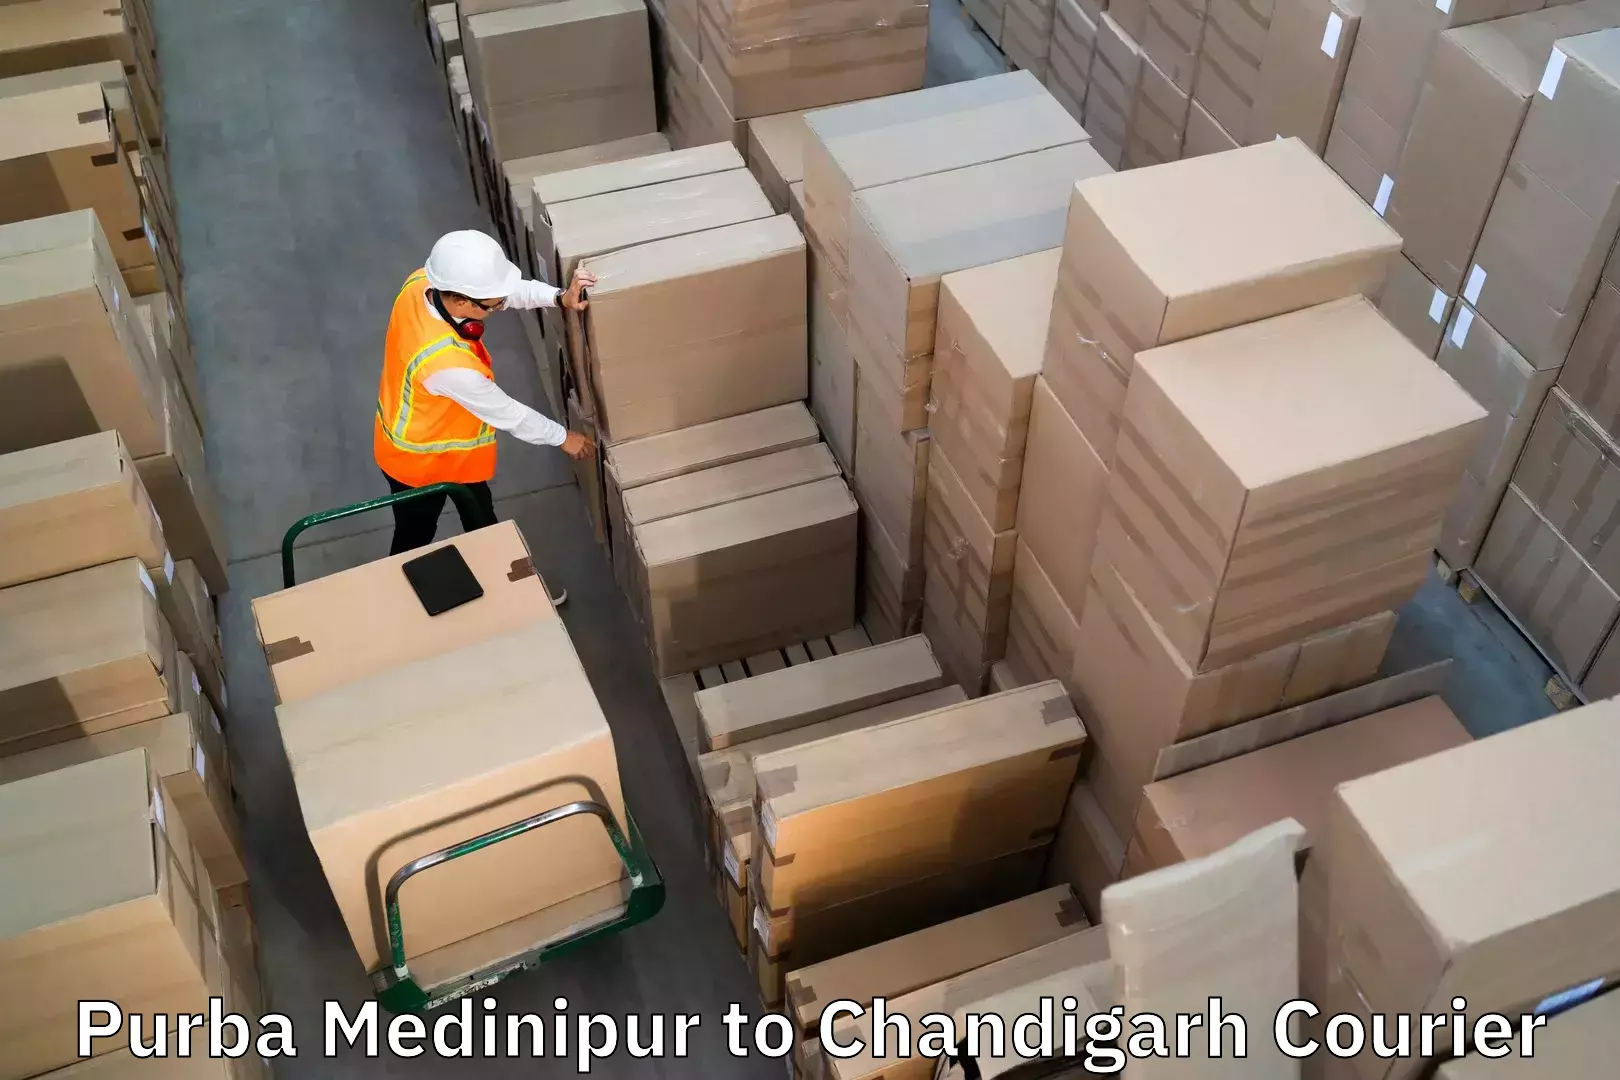 Baggage relocation service Purba Medinipur to Chandigarh